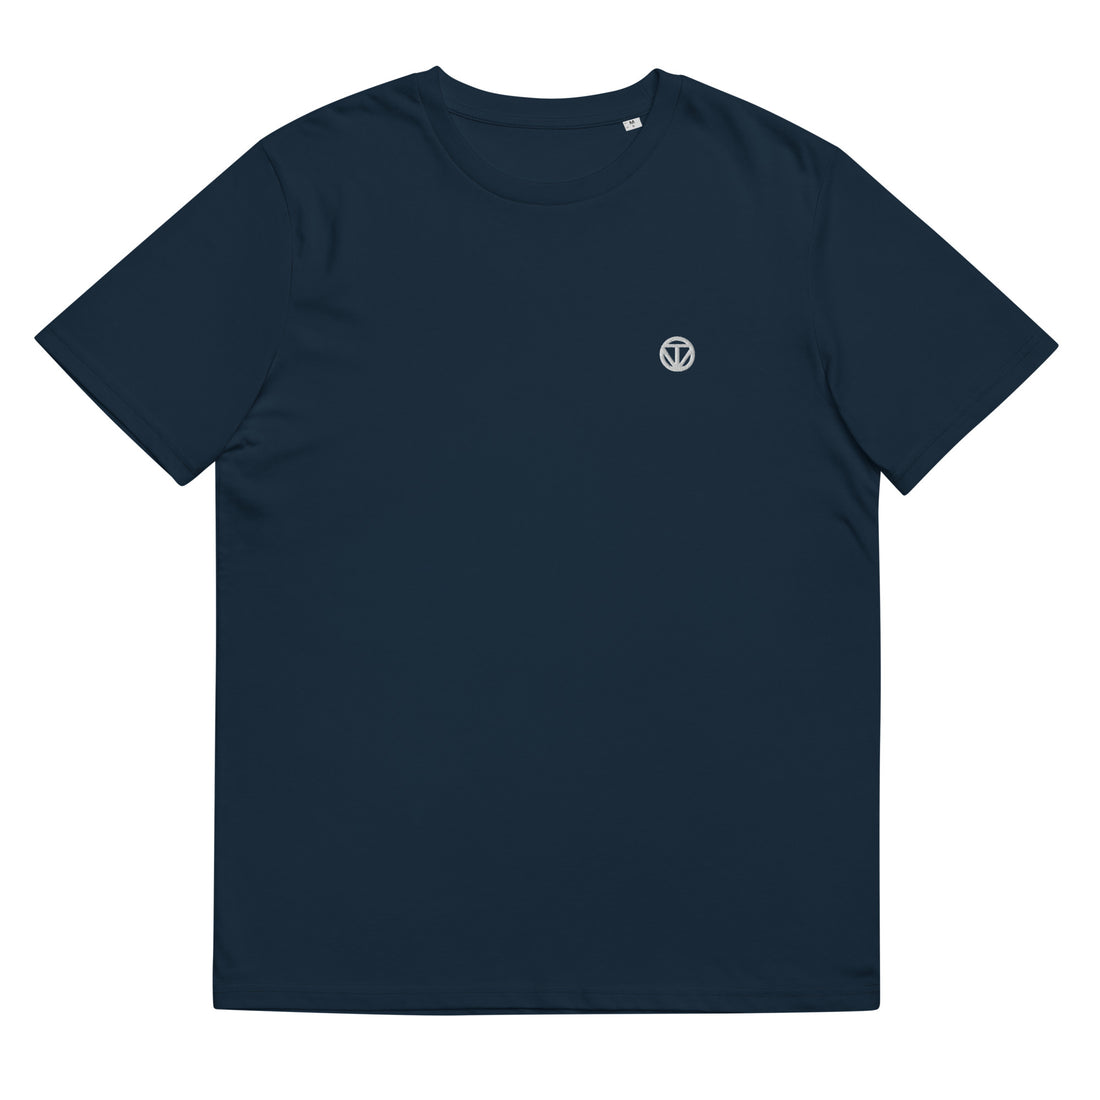 TIME OF VIBES Bio-Baumwoll T-Shirt (Marineblau) - €33,50